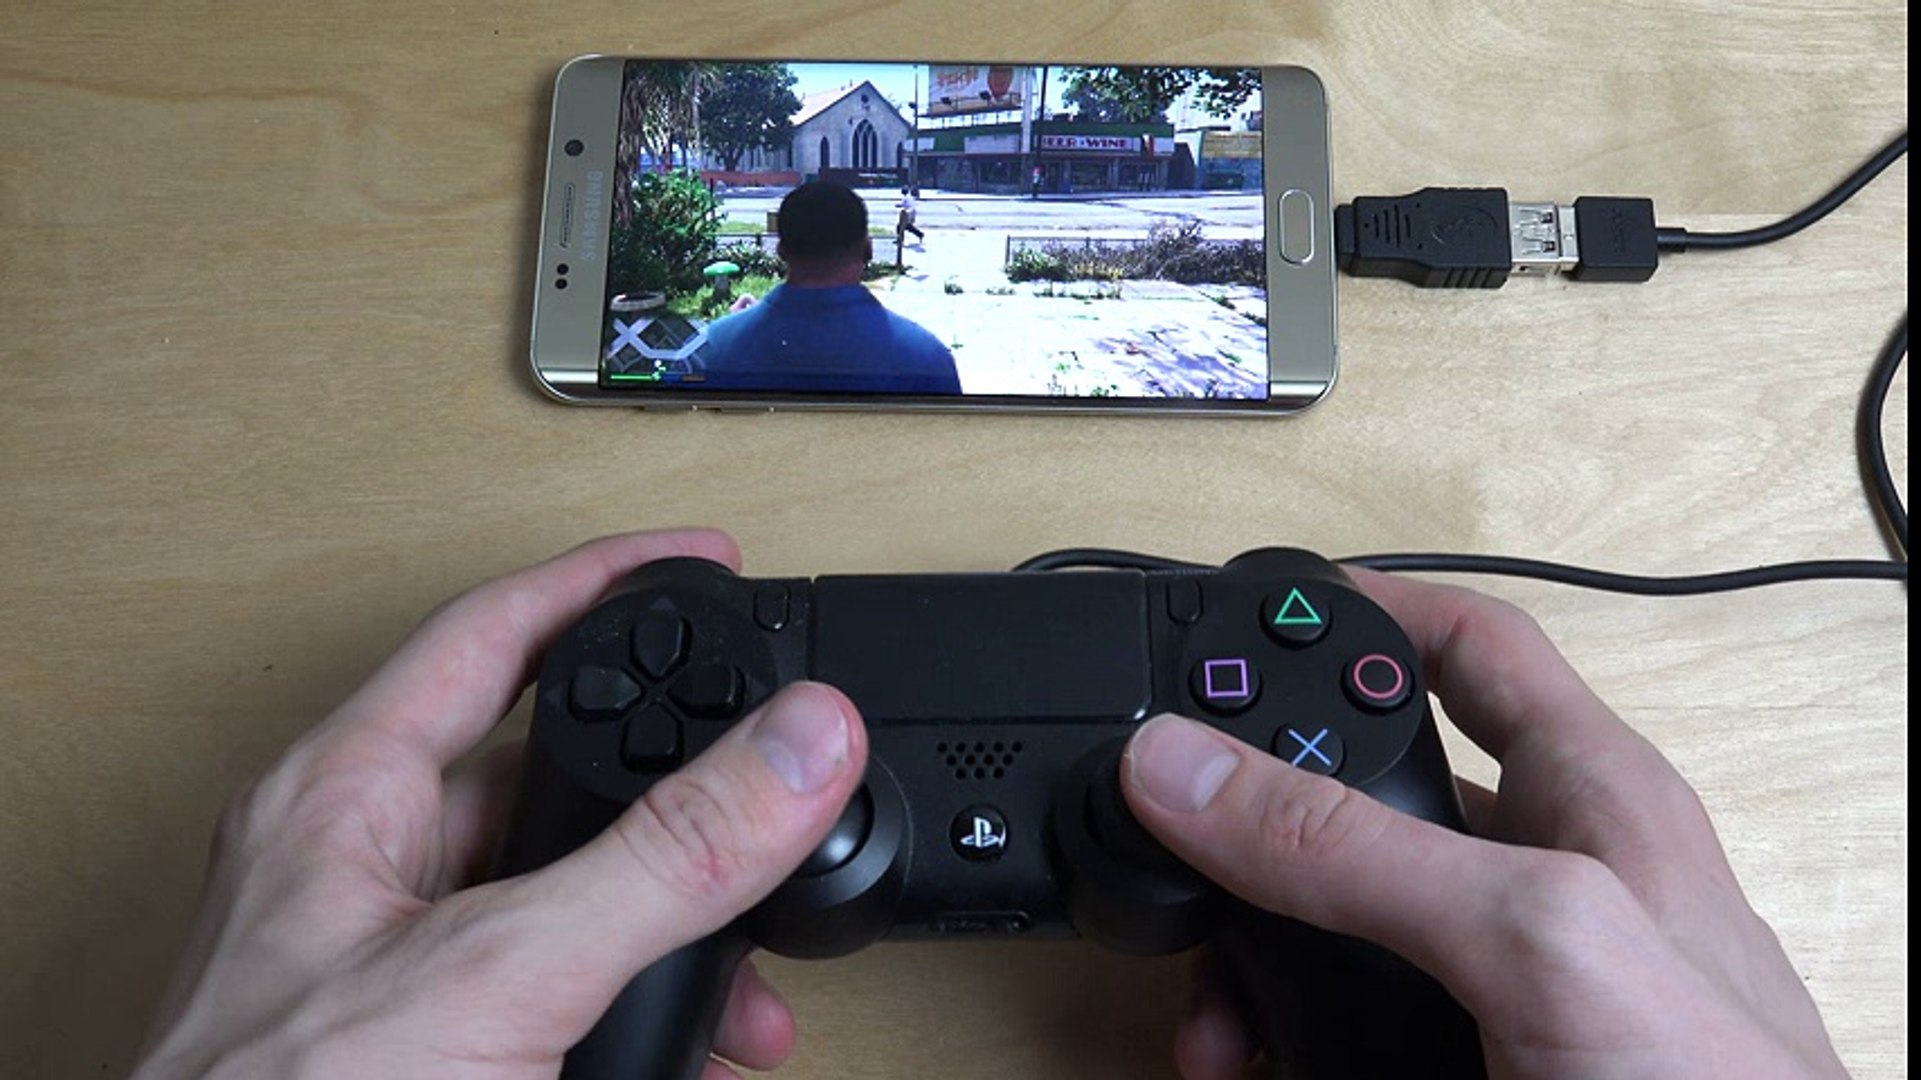 GTA 5 Samsung Galaxy S6 Edge Plus NVIDIA GameStream PS4 Controller  Gameplay! - video Dailymotion